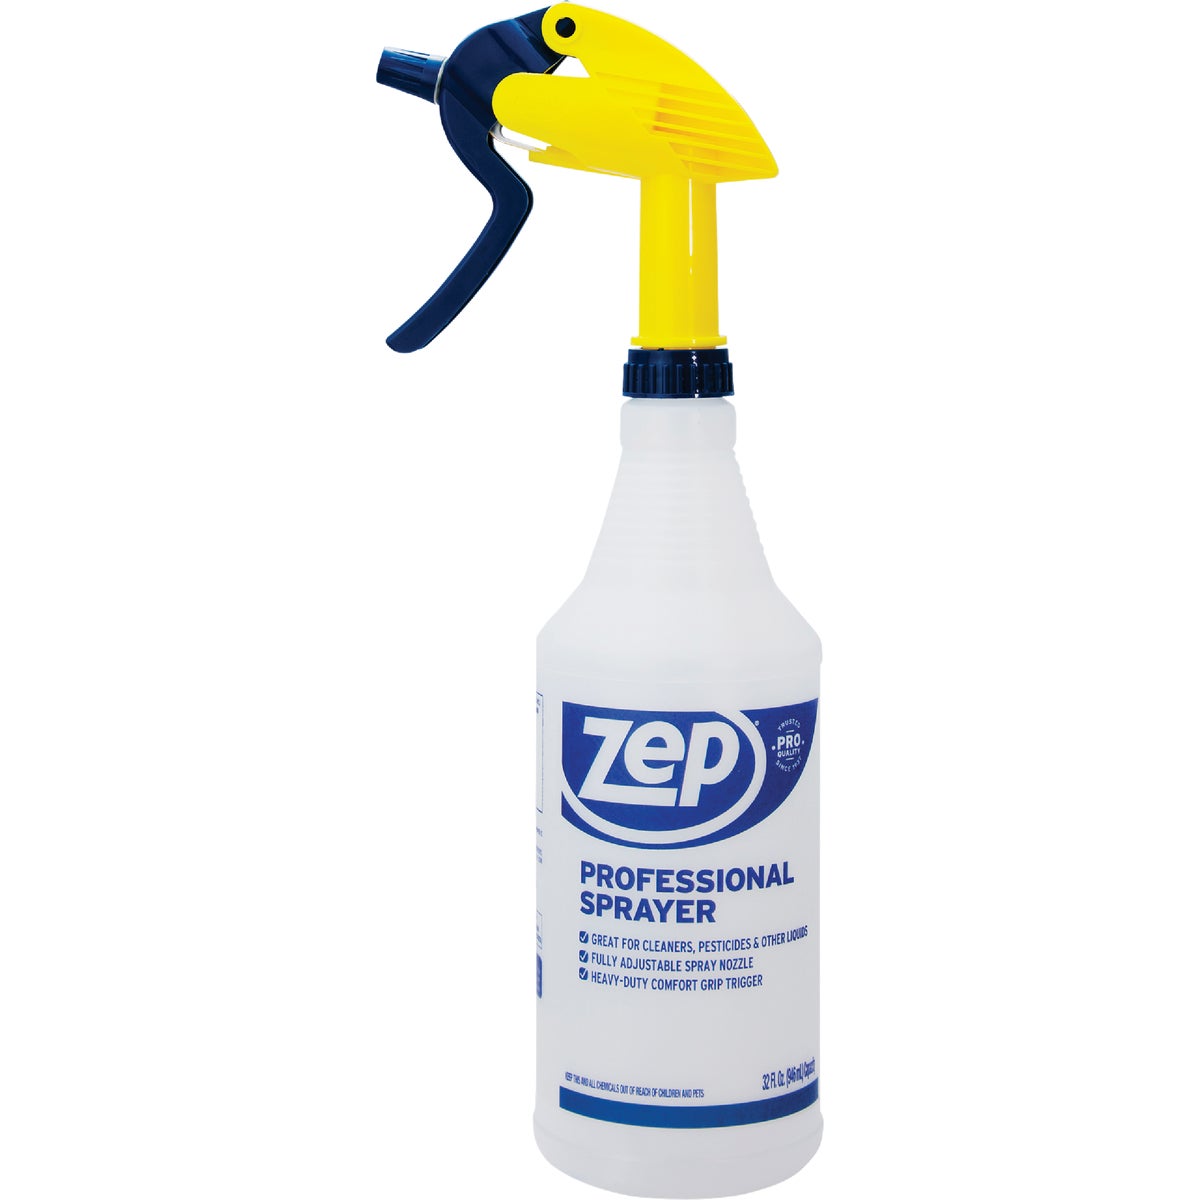 Item 619116, Zep professional spray bottle has premium spray head and provides long-